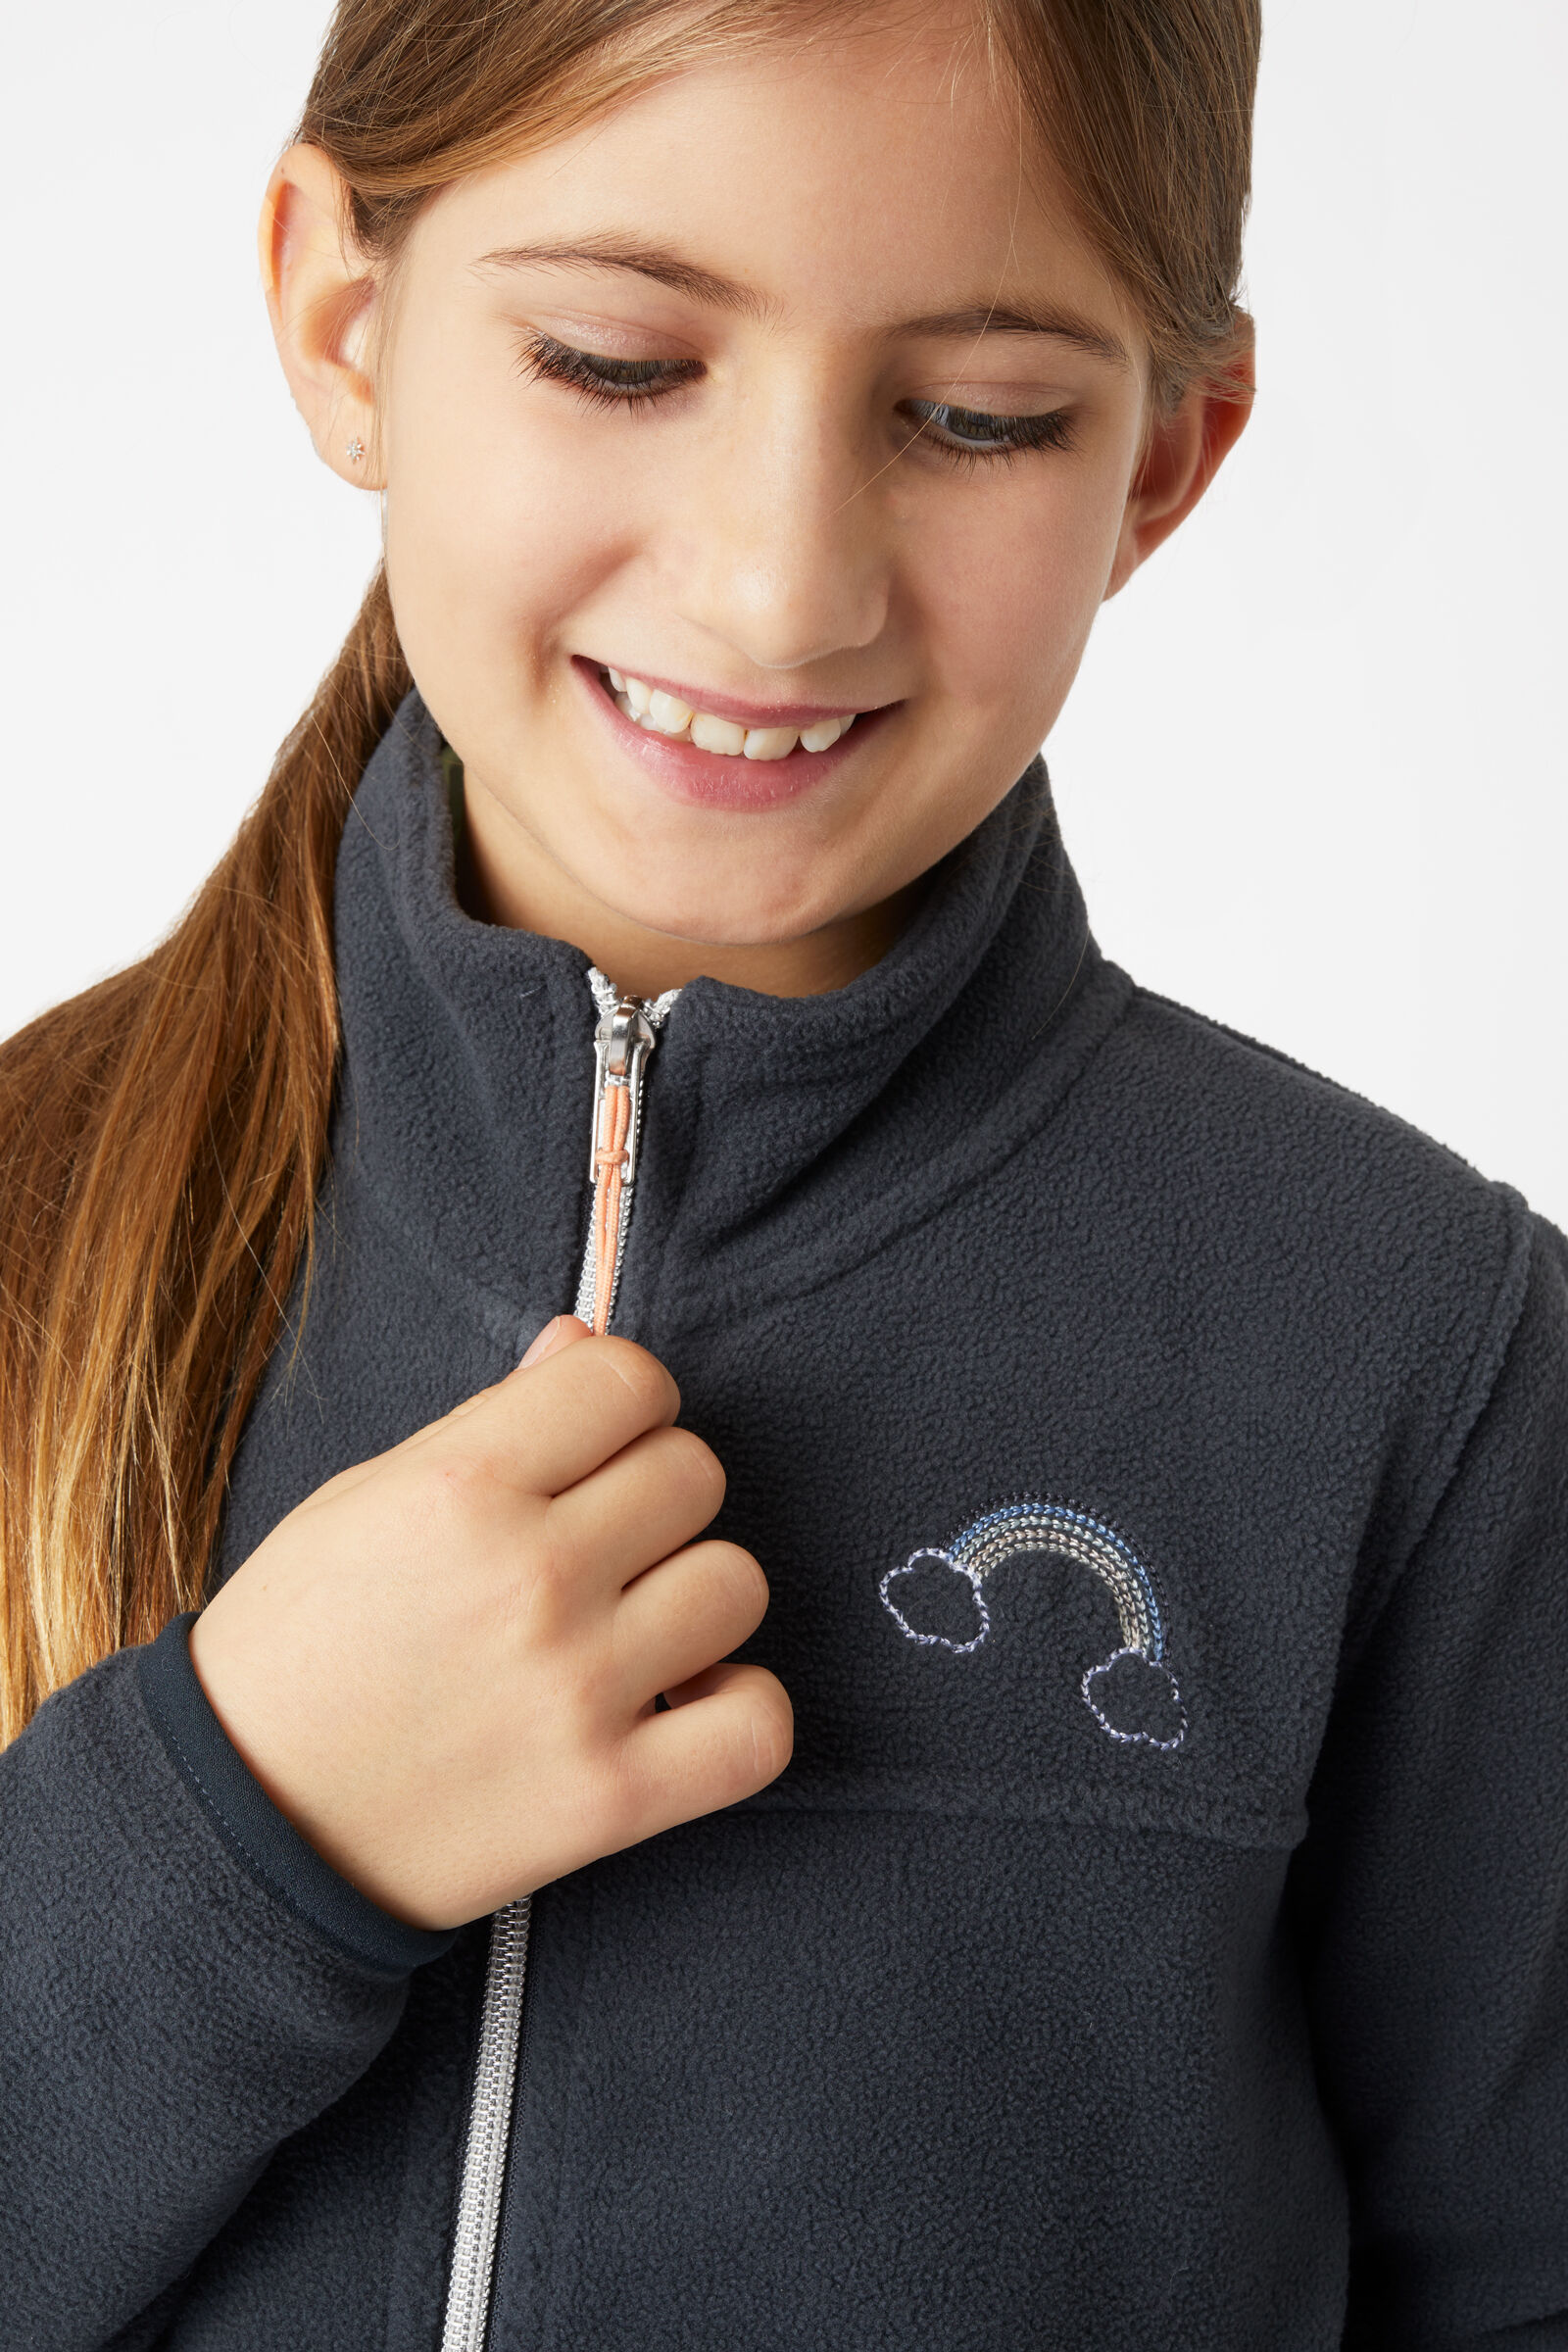 Kids Fleece Jackets For Boys & Girls | Childrens Fleeces